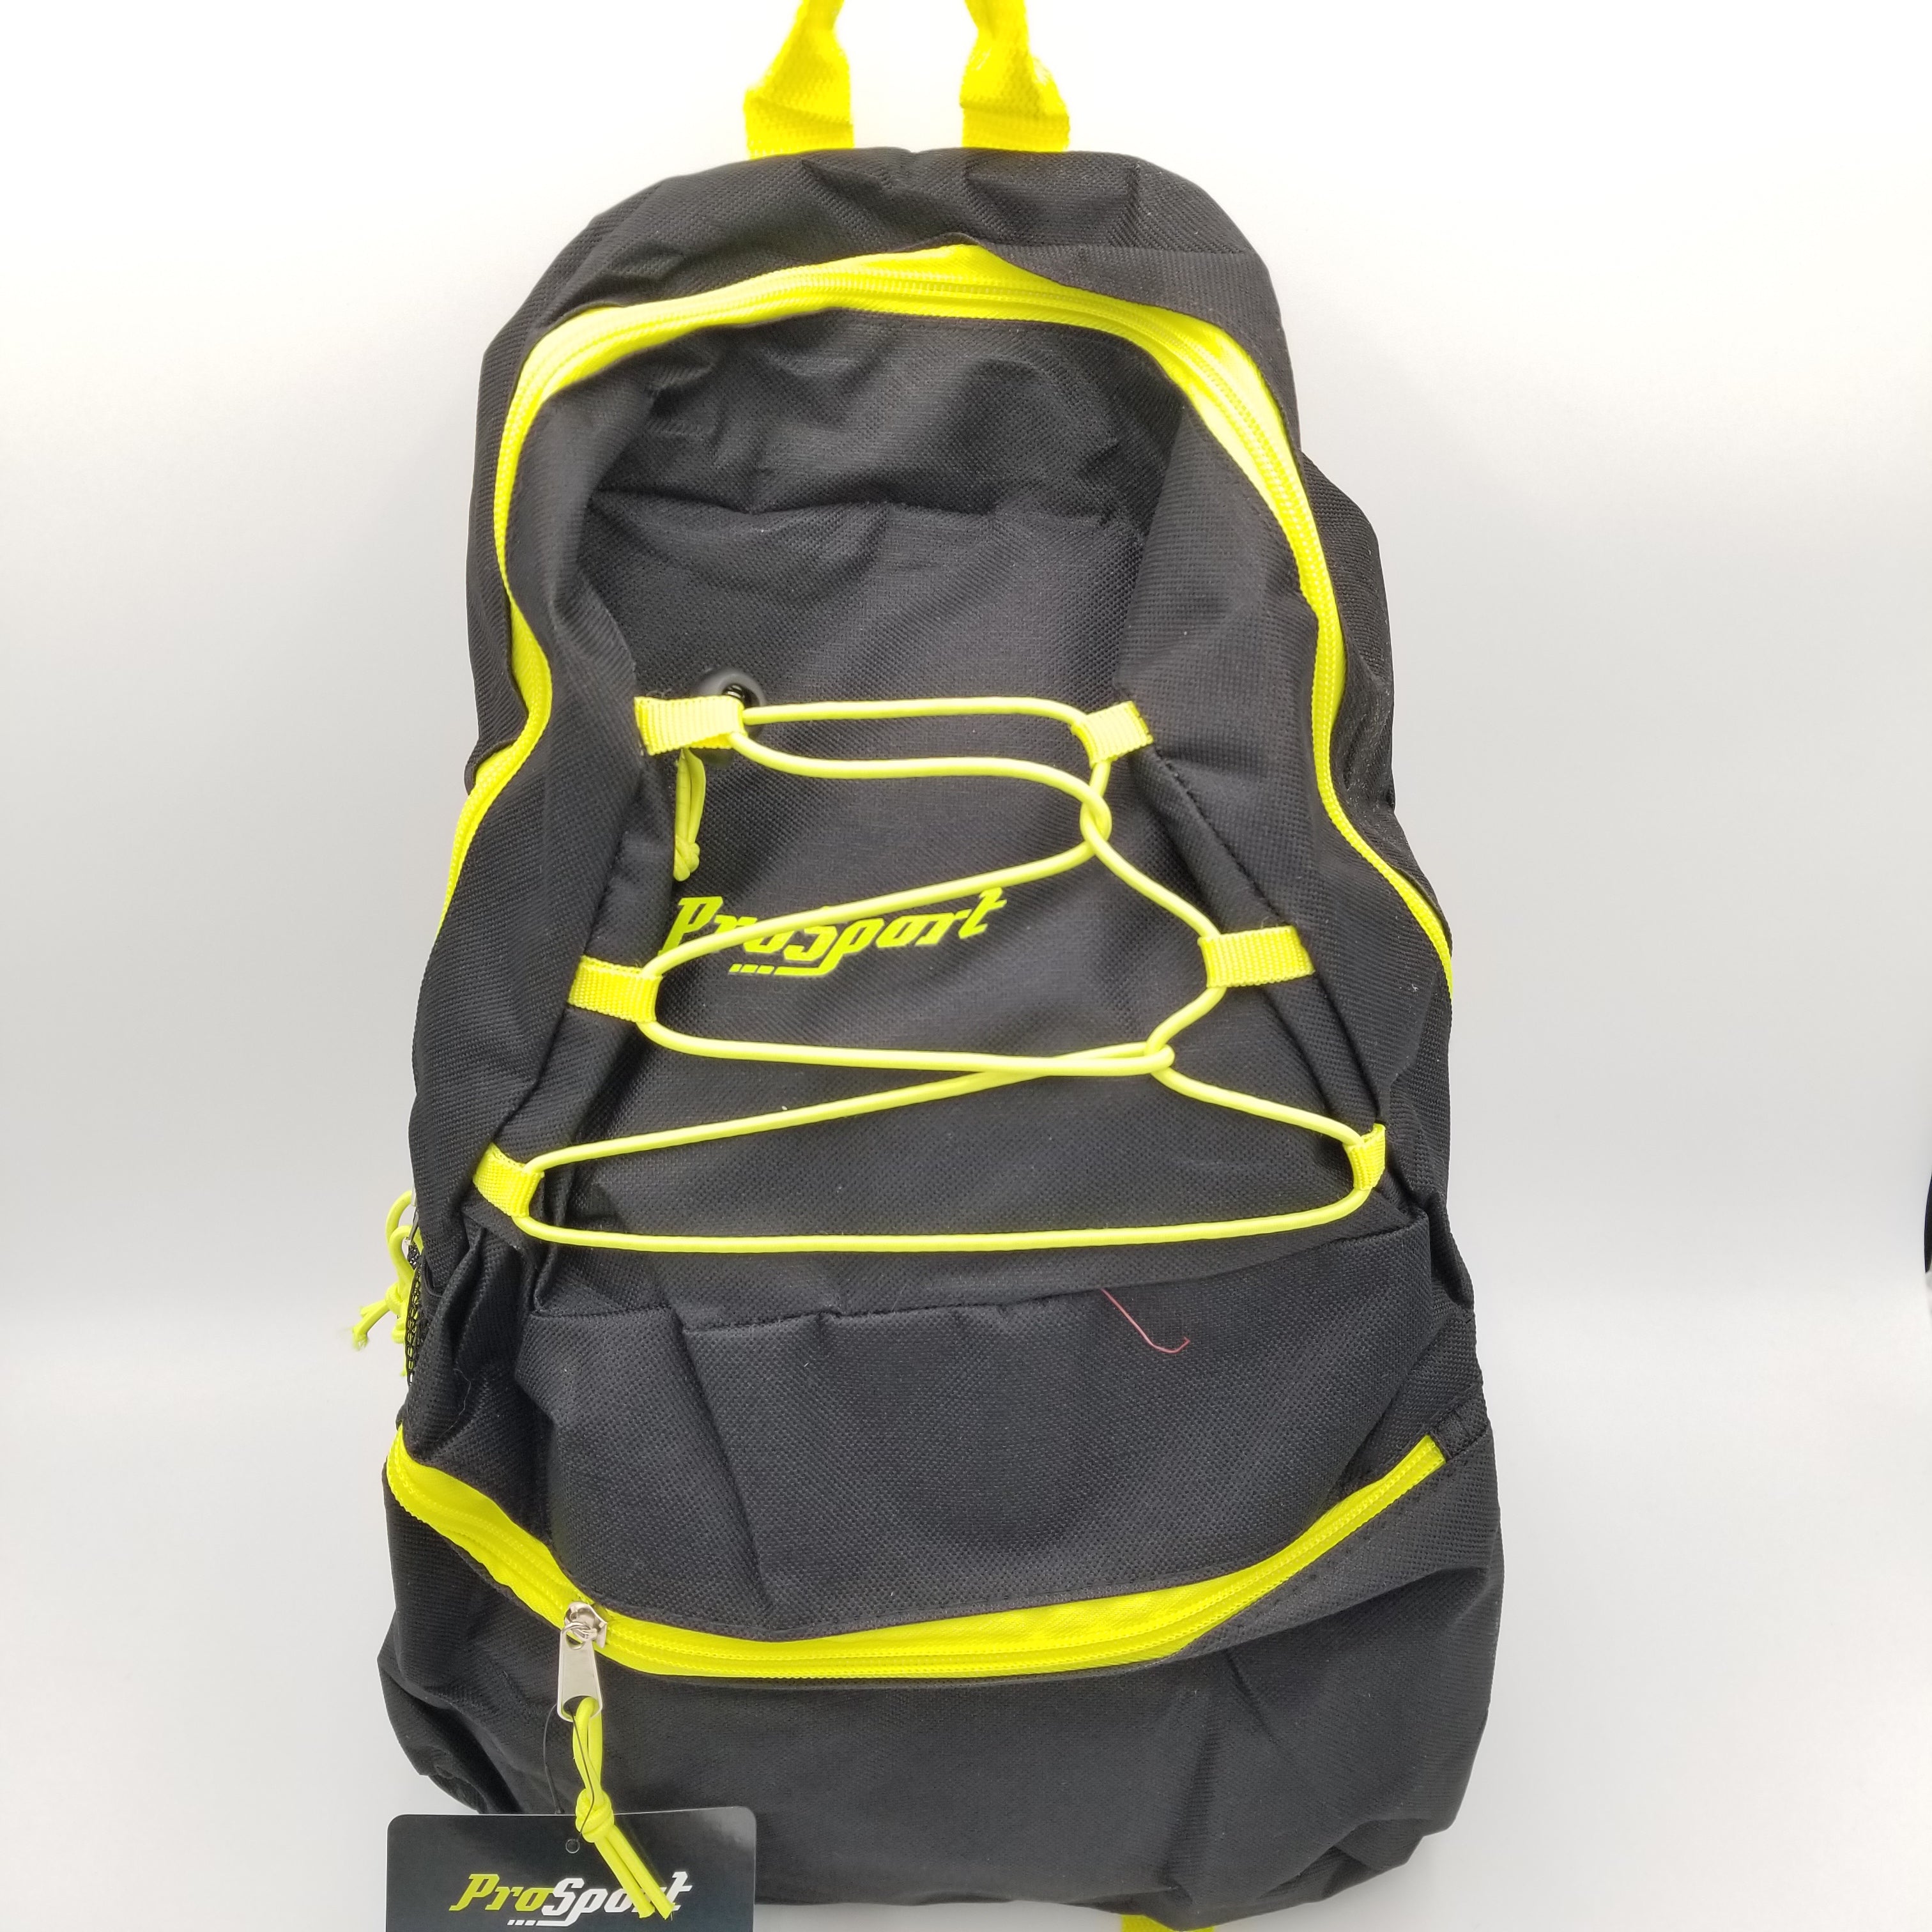 ProSport Backpack- Black/Yellow